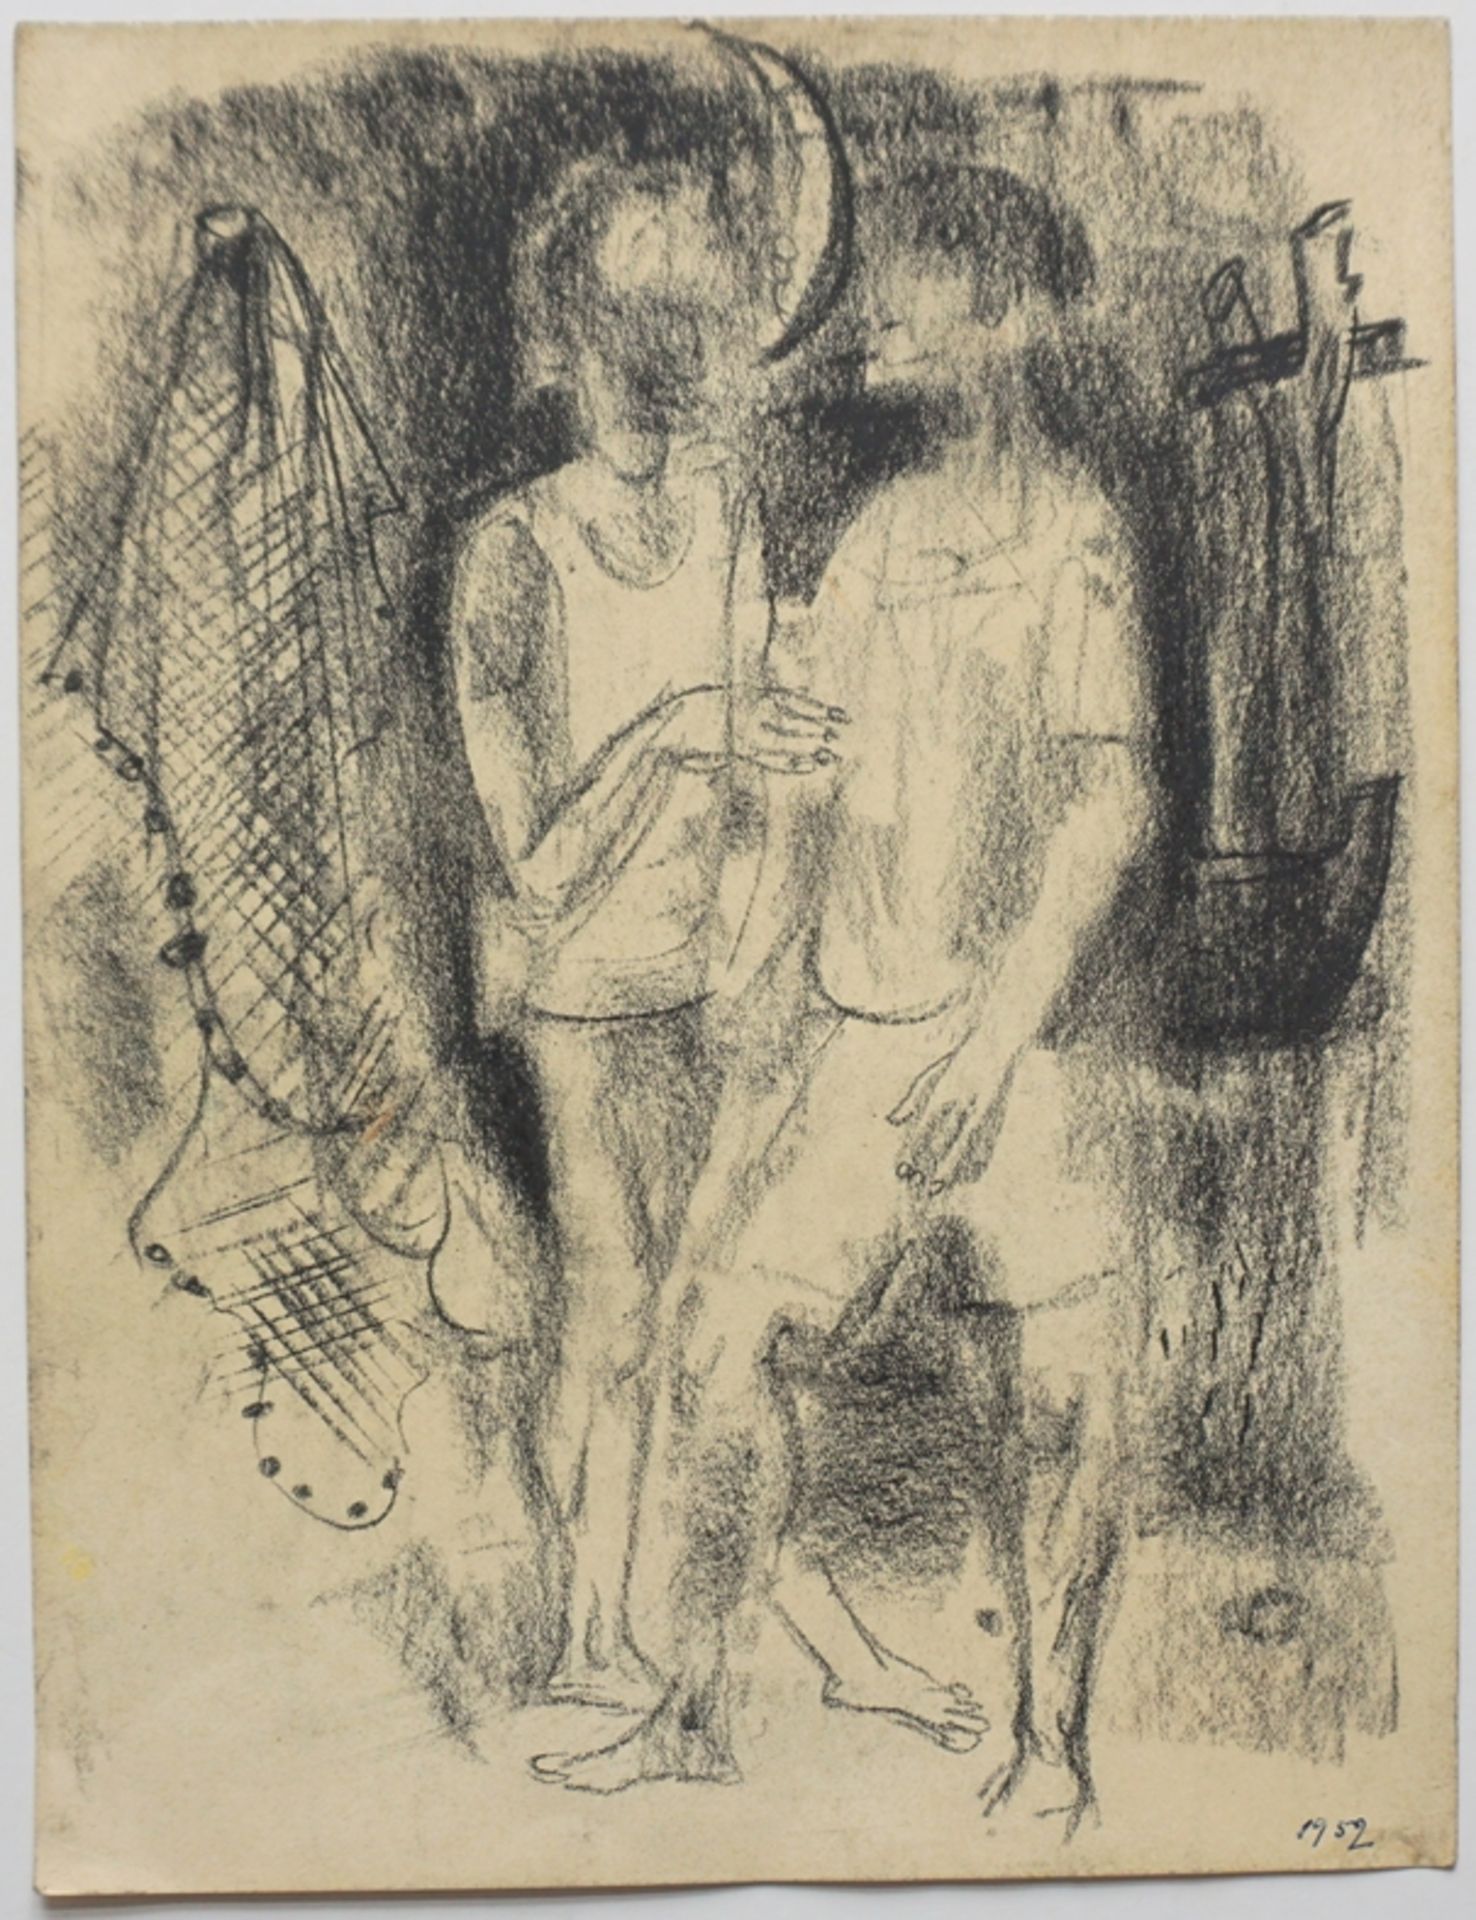 Paul Kuhfuss (1883, Berlin - 1960, ebd.), "Im Gespräch", 1952, Kohle/Papier